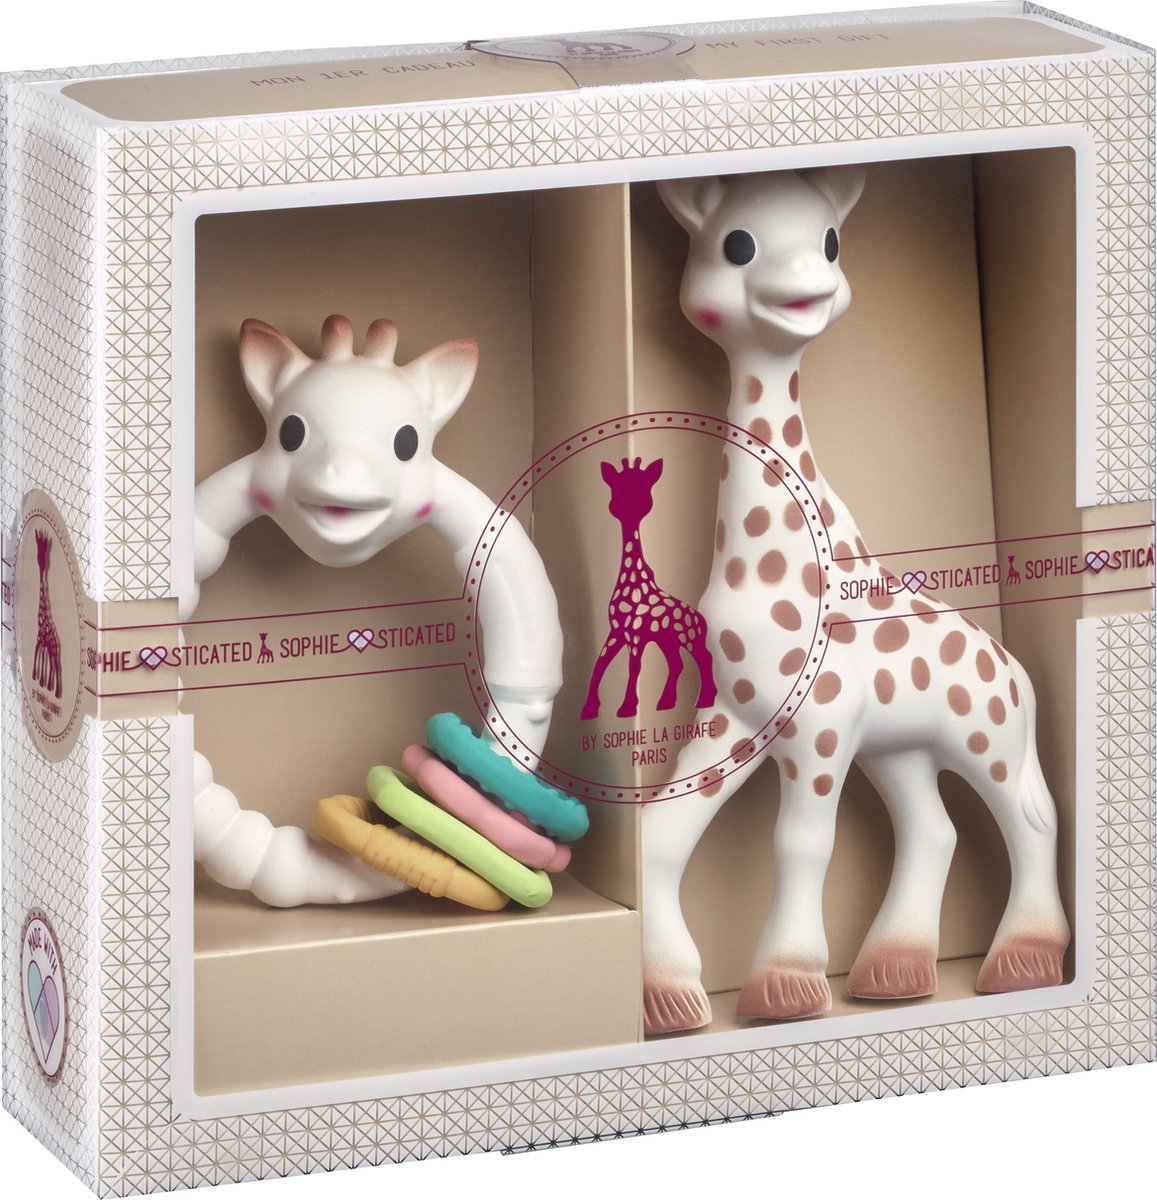 Sophie de giraf Sophiesticated Cadeauset - Baby speelgoed - Sophie de giraf & So Pure Colo'Rings - Kraamcadeau – Babyshower cadeau - 4-Delig - Sophie de Giraf